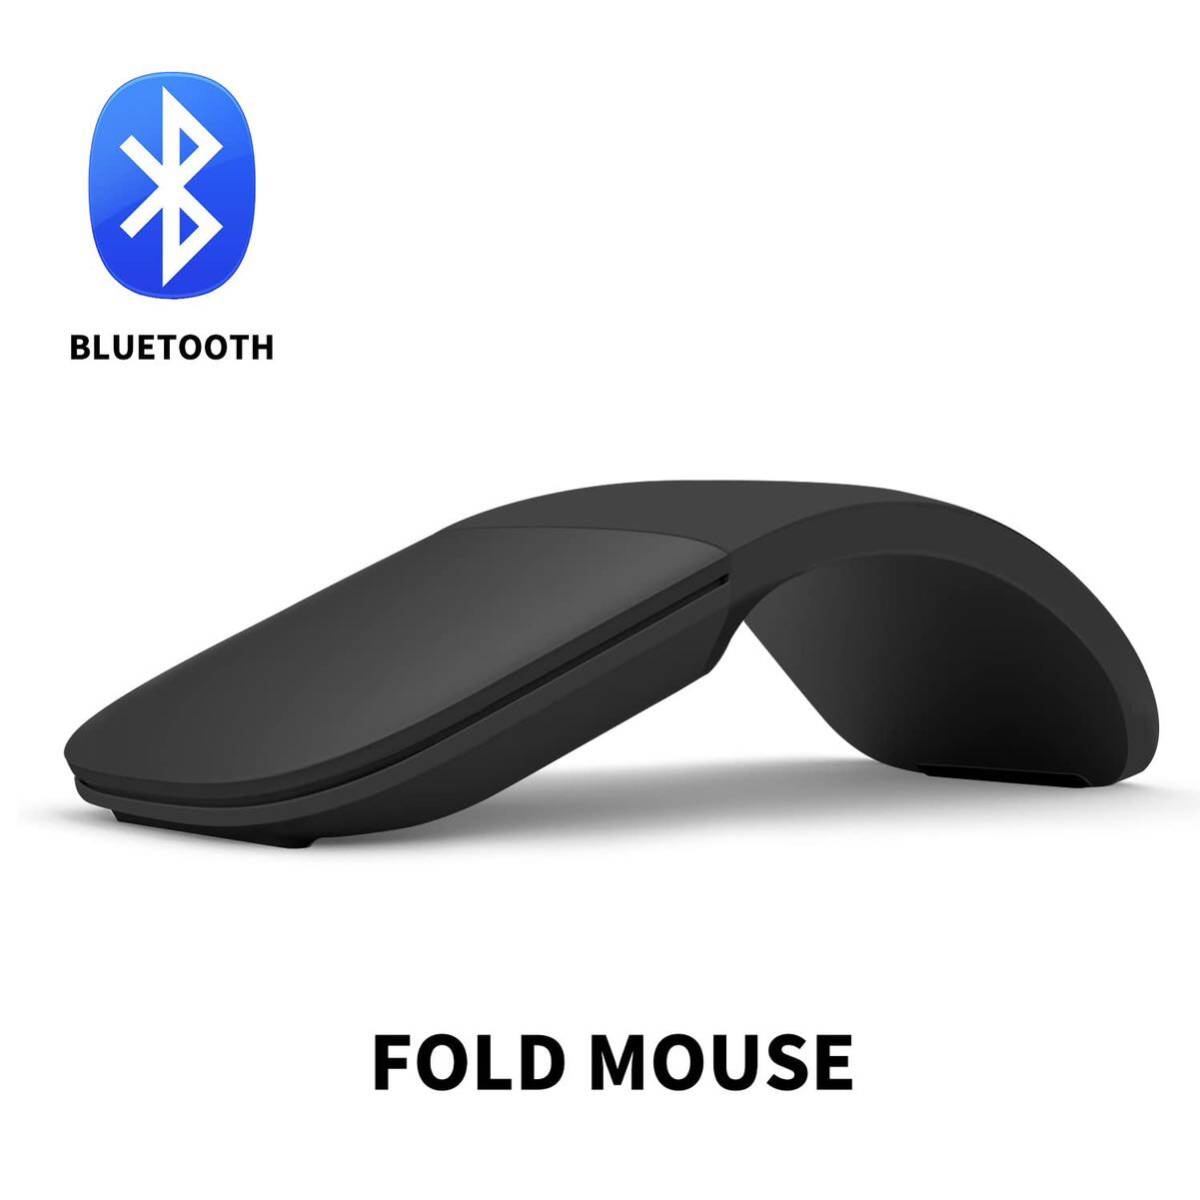 Bluetooth対応/折りたたみ式 ワイヤレスマウス 小型 持ち運び便利接続/使用簡単Arc Mouse 在宅勤務 Windows/macOS/iPad OS/IOS/Android対応_画像2